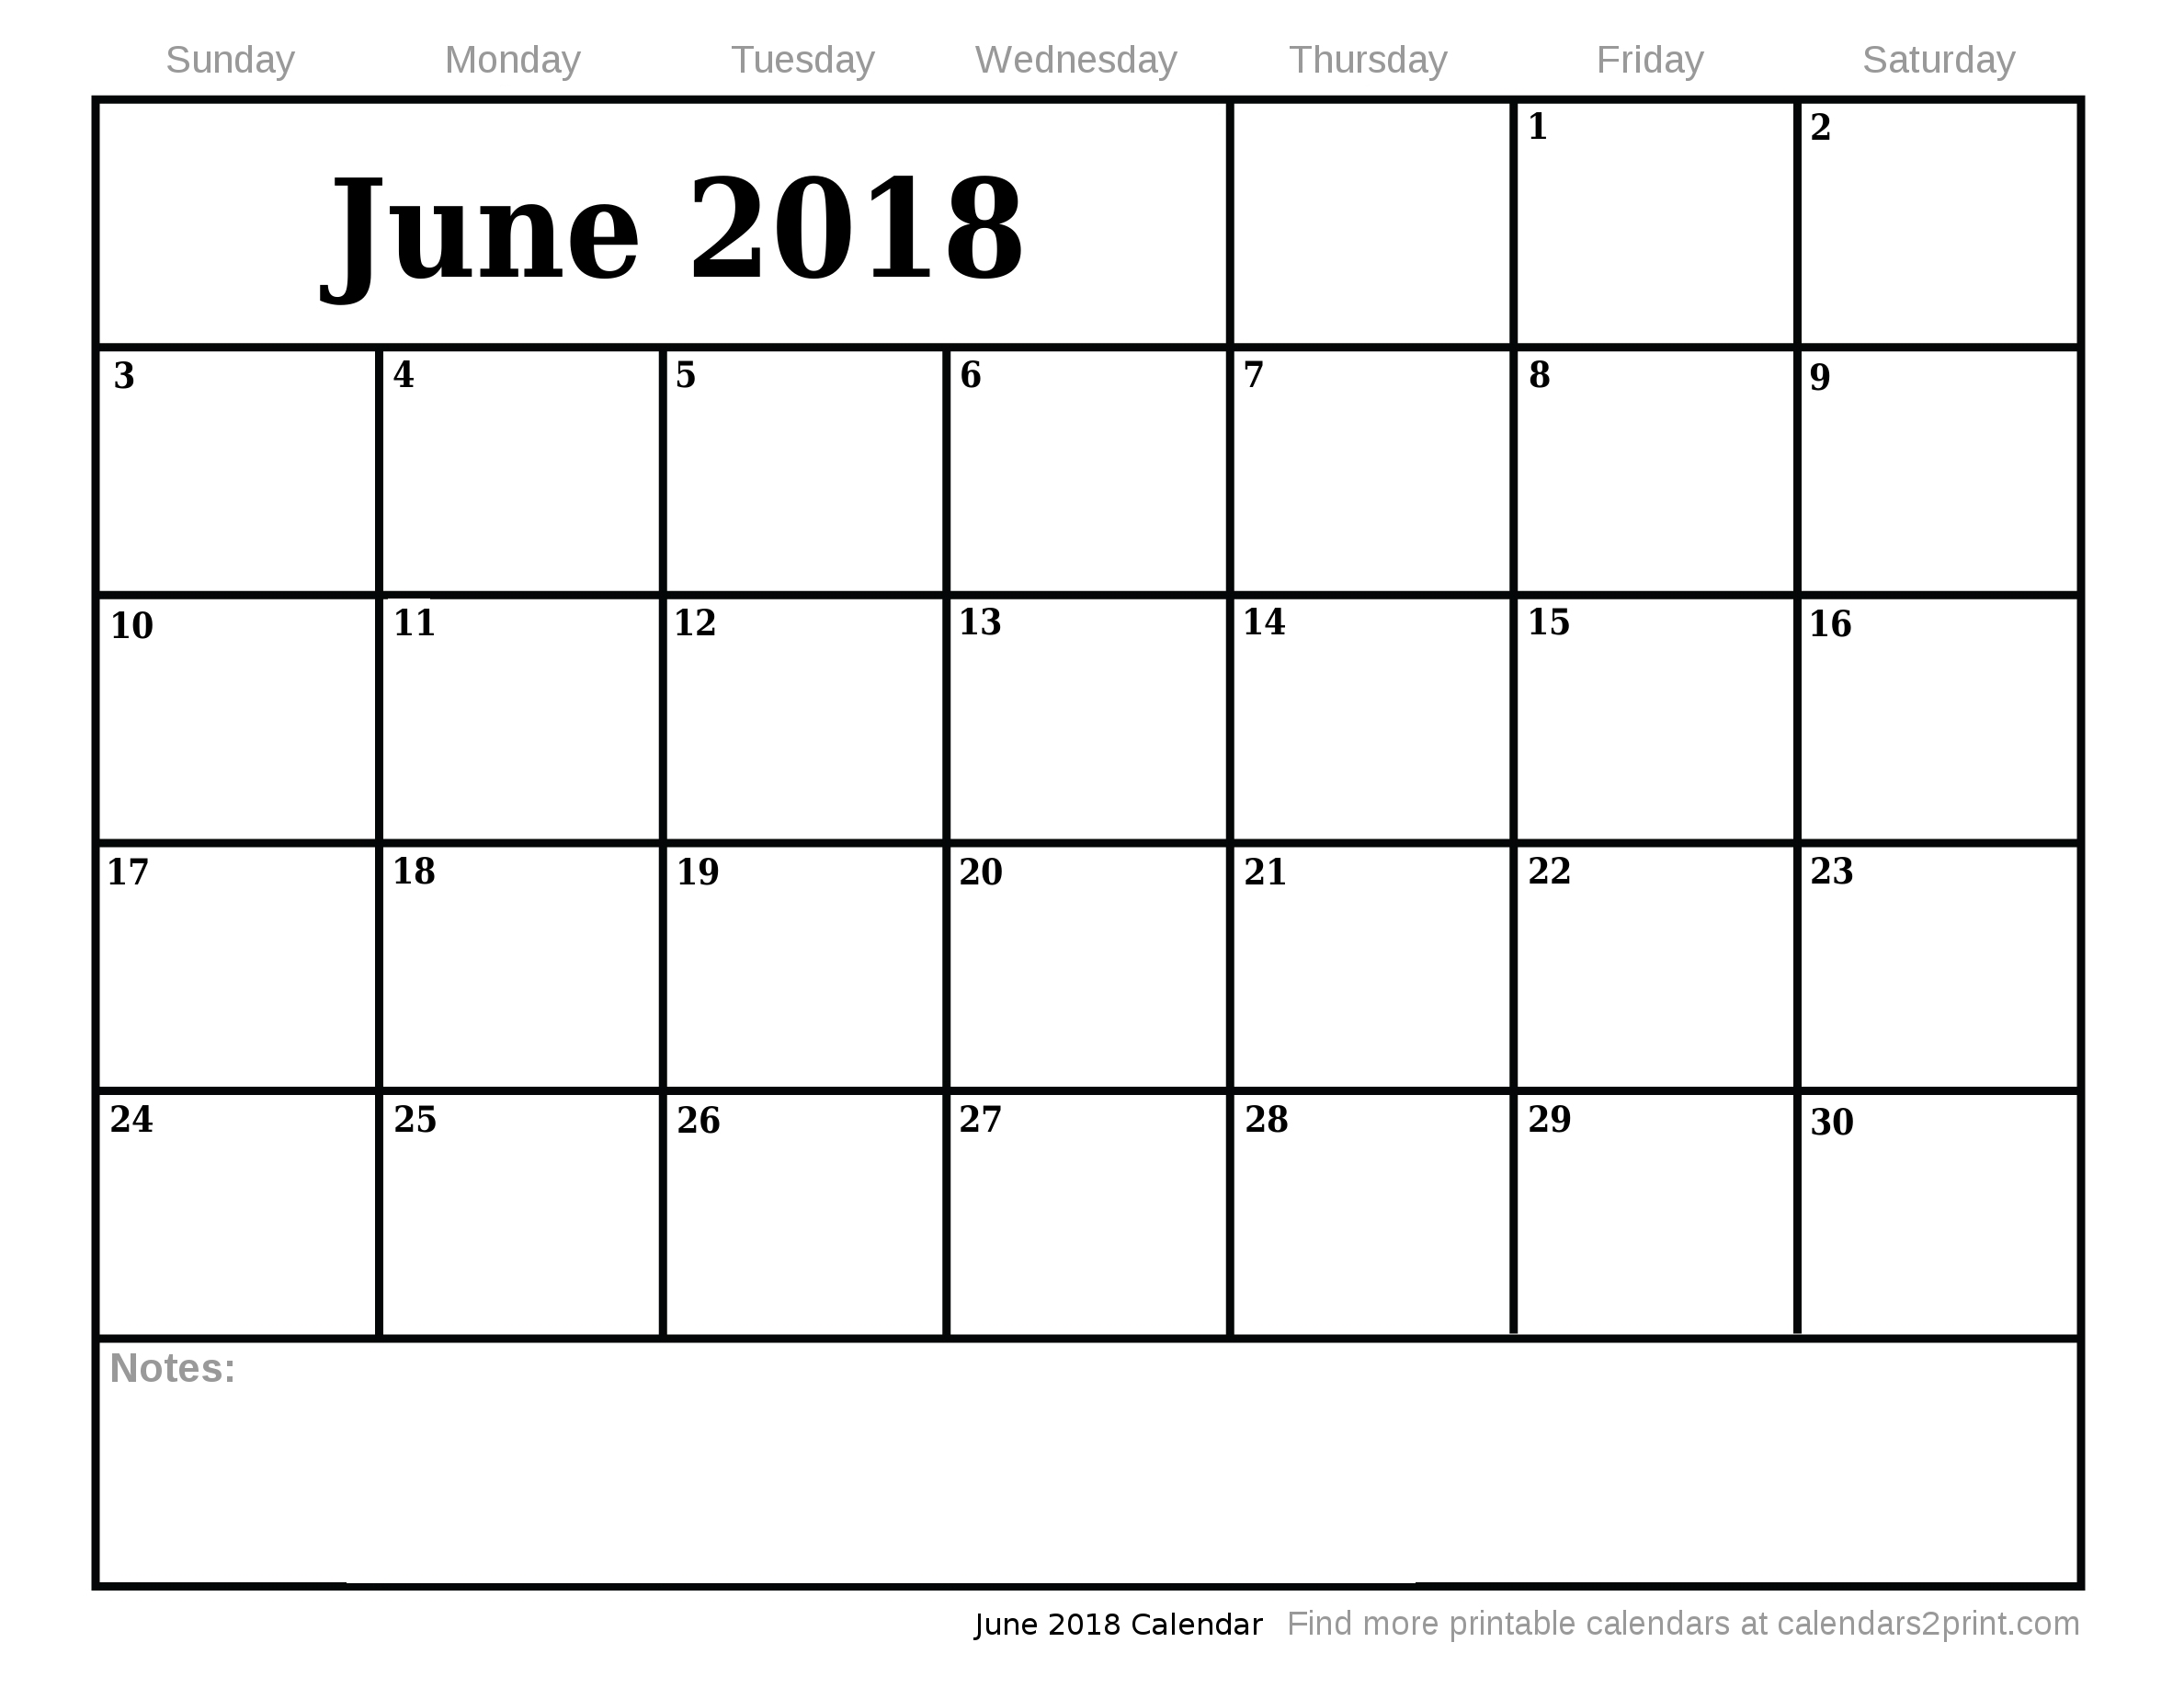 Jun 2018 Printable Calendar